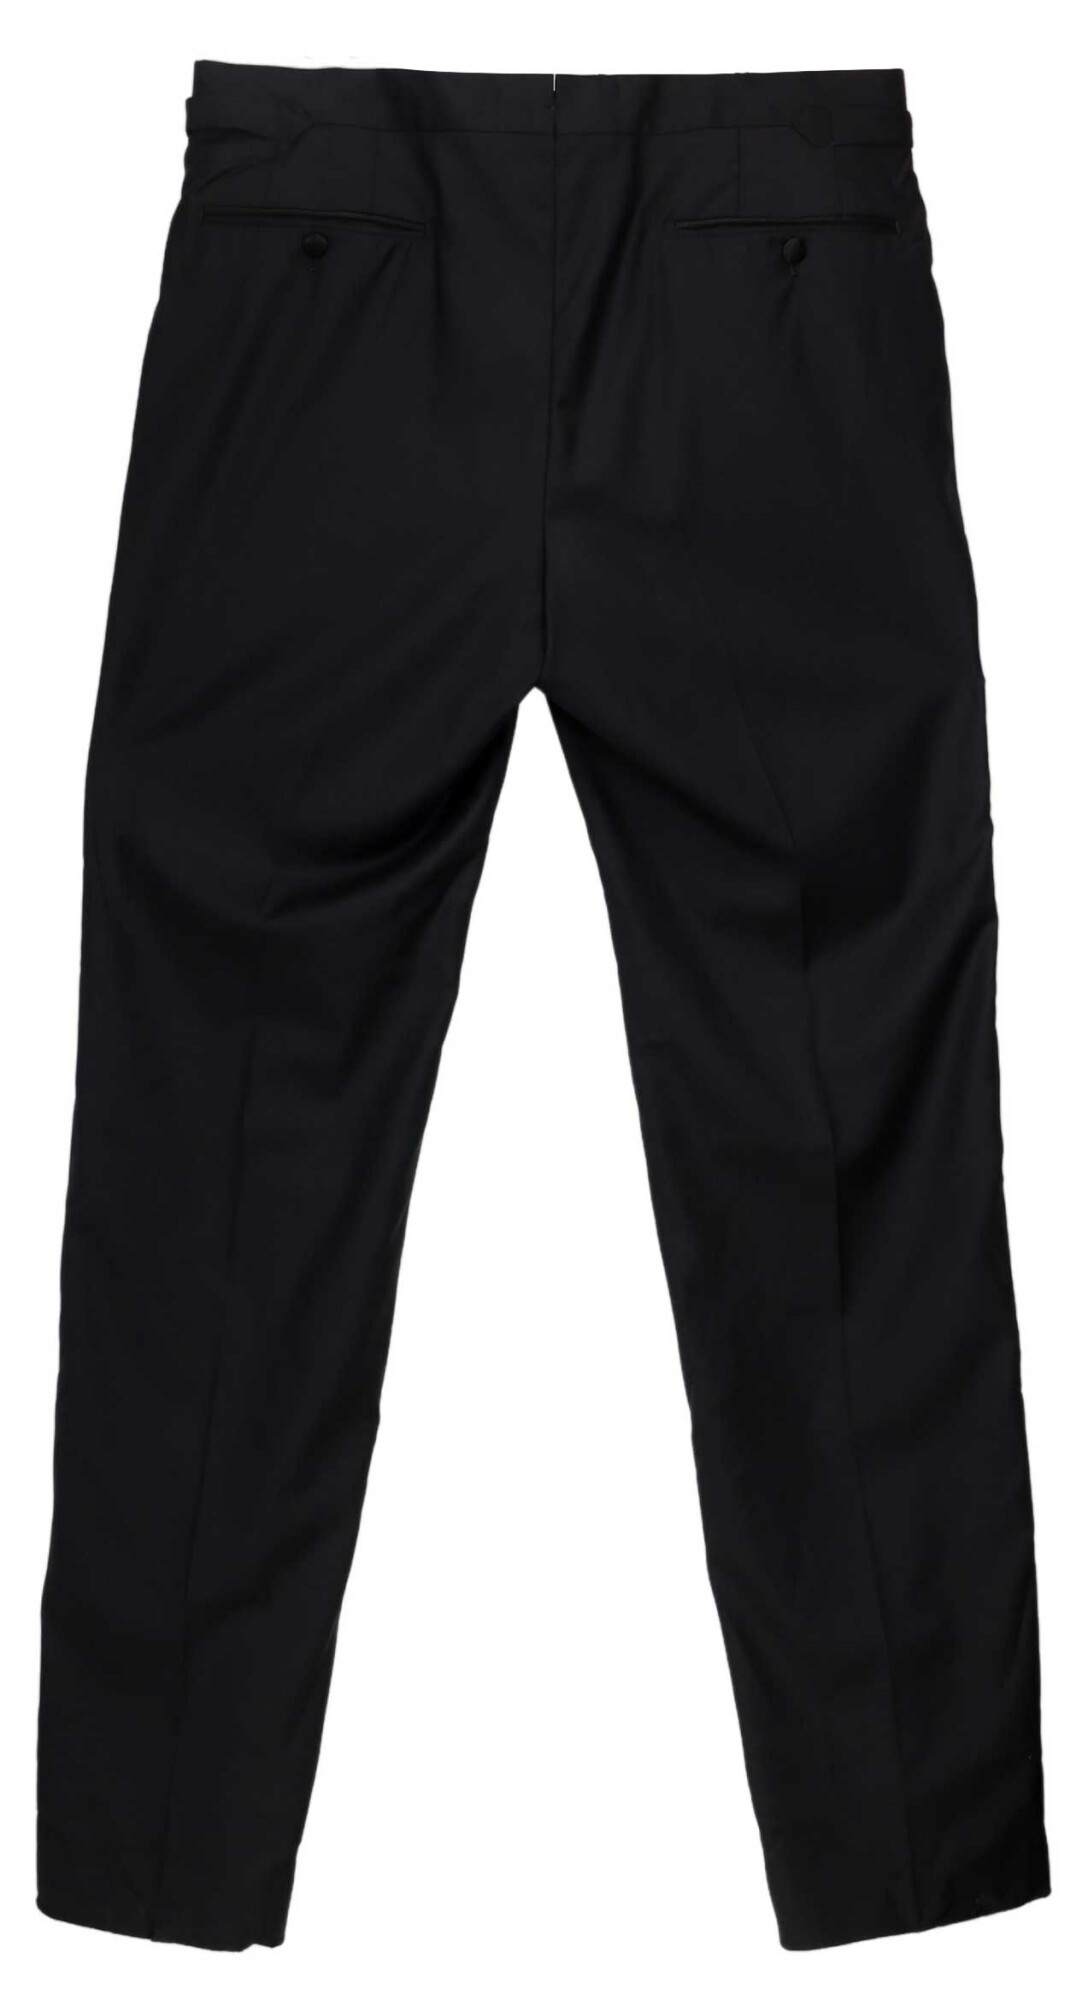 Tom Ford Men's Black Two-Piece Dinner Suit - 44 US / 54 EU - image 4 of 4